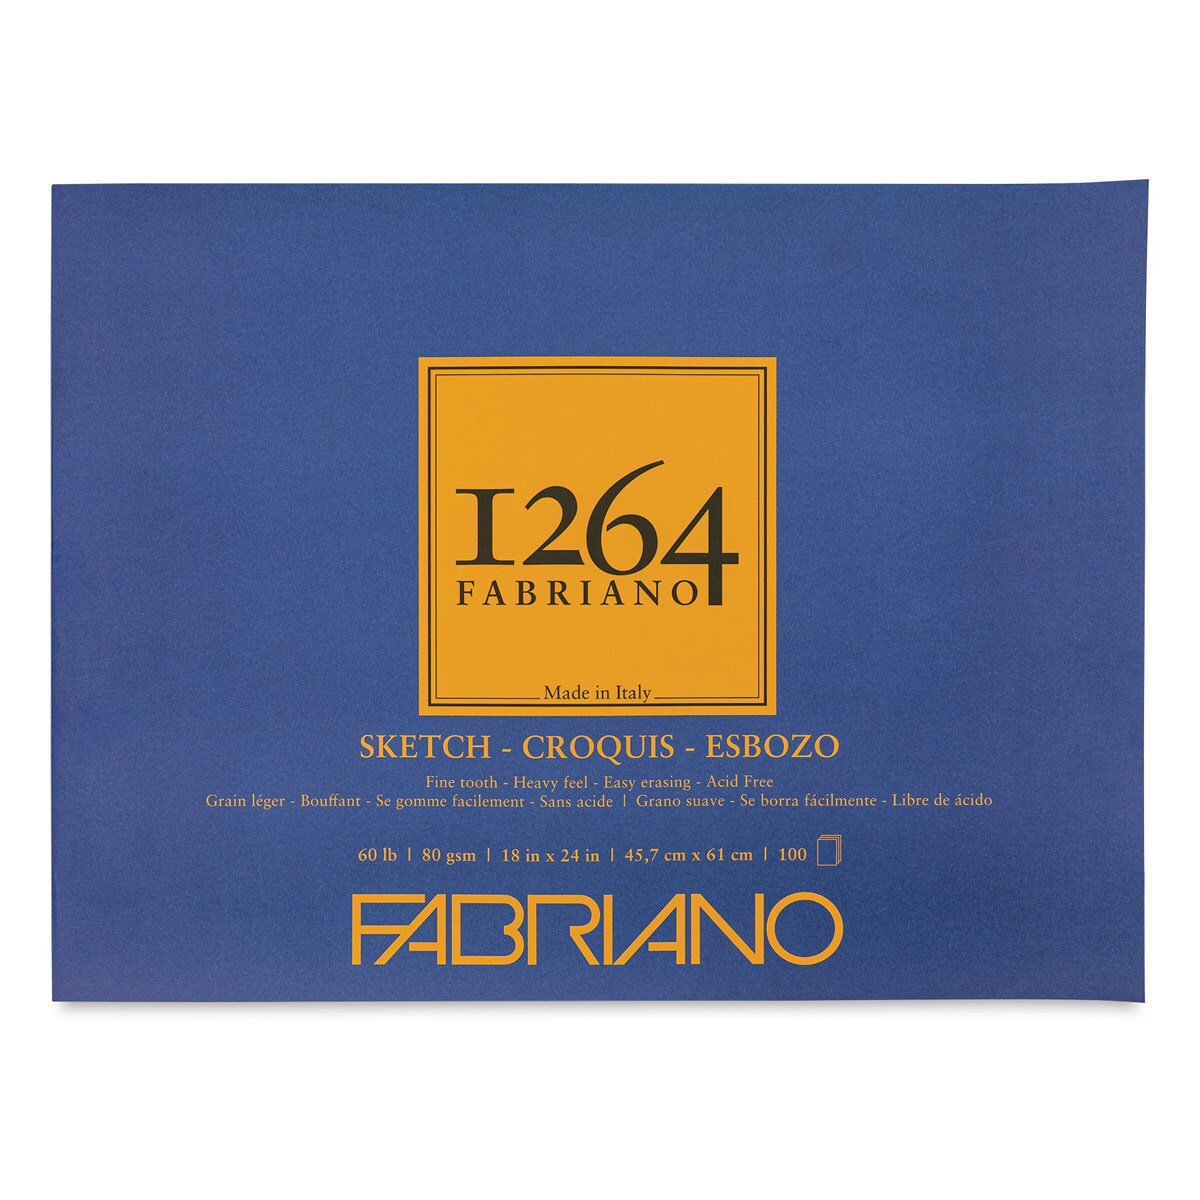 Fabriano 1264 Sketch Pad, 18&#x22; x 24&#x22;, Glue Bound, 100 Sheets, Landscape